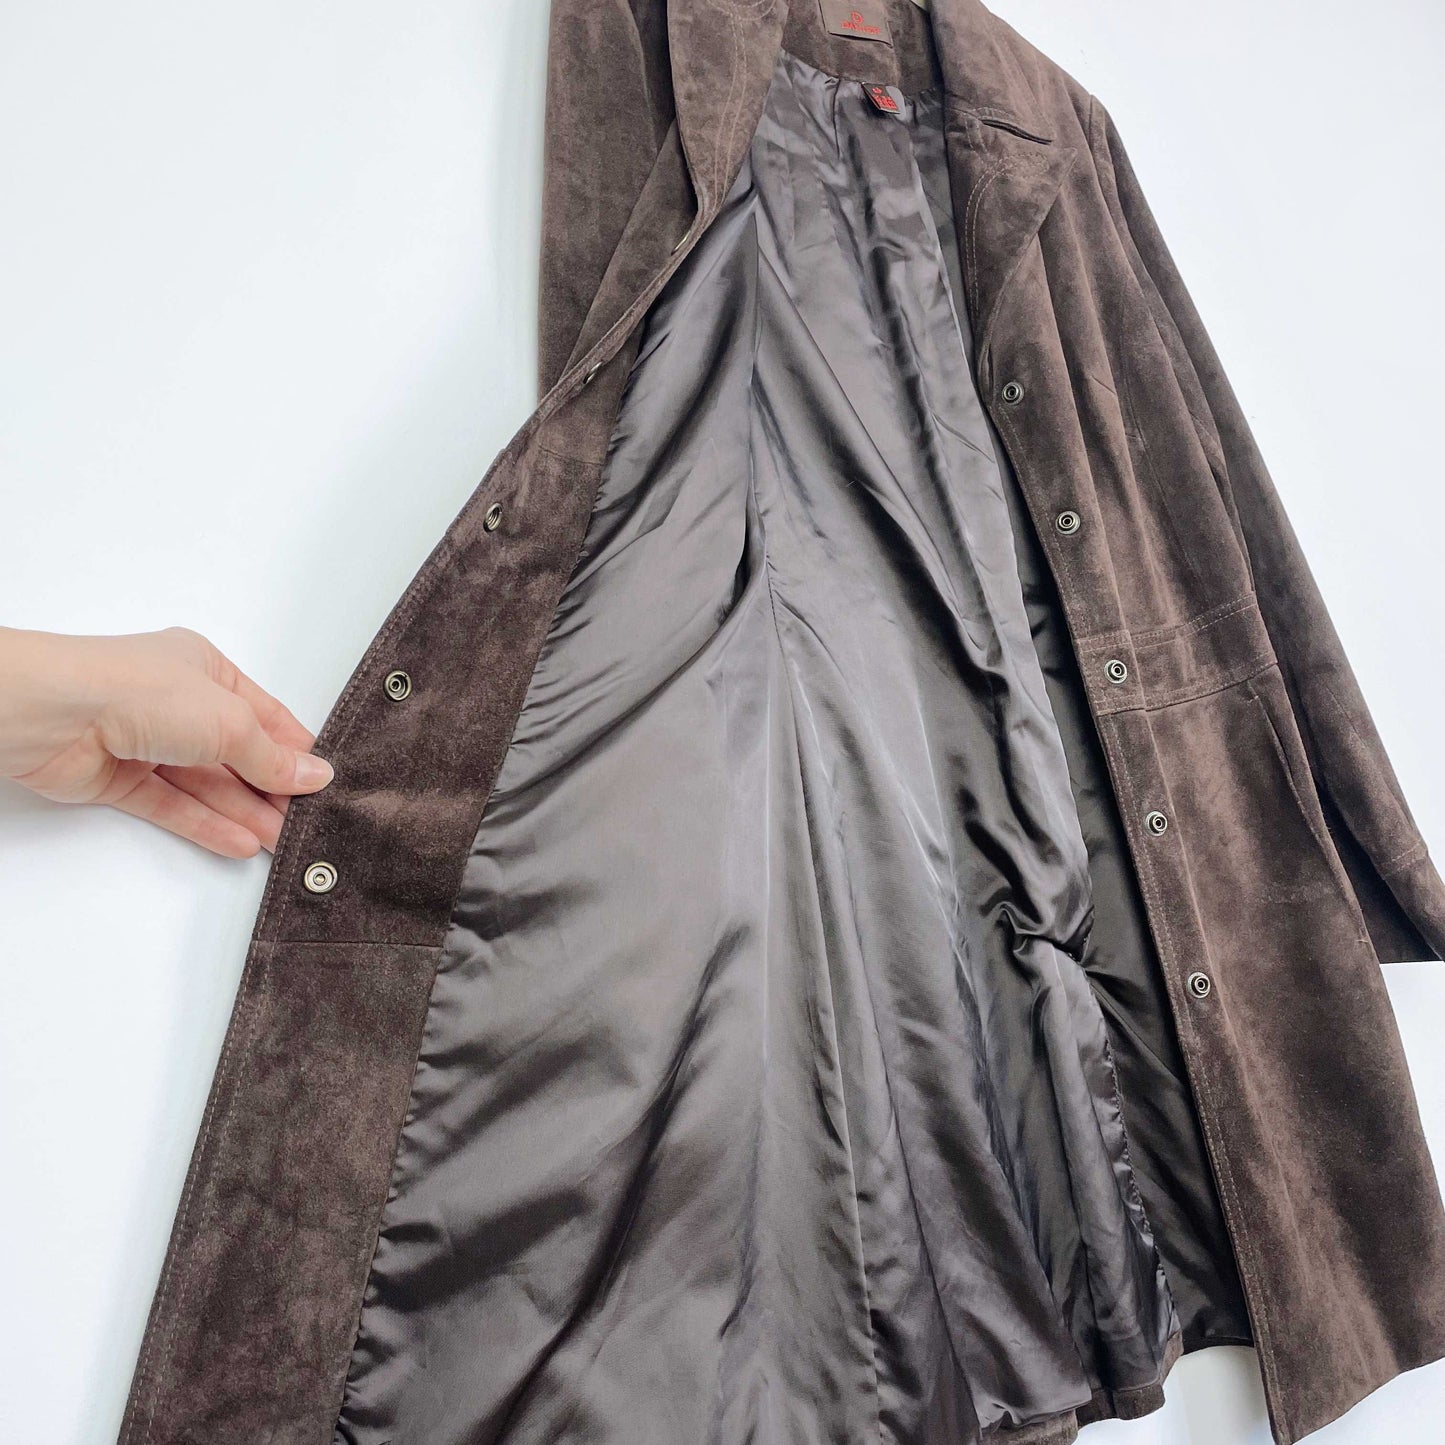 vintage danier brown suede western stitch jacket - size small